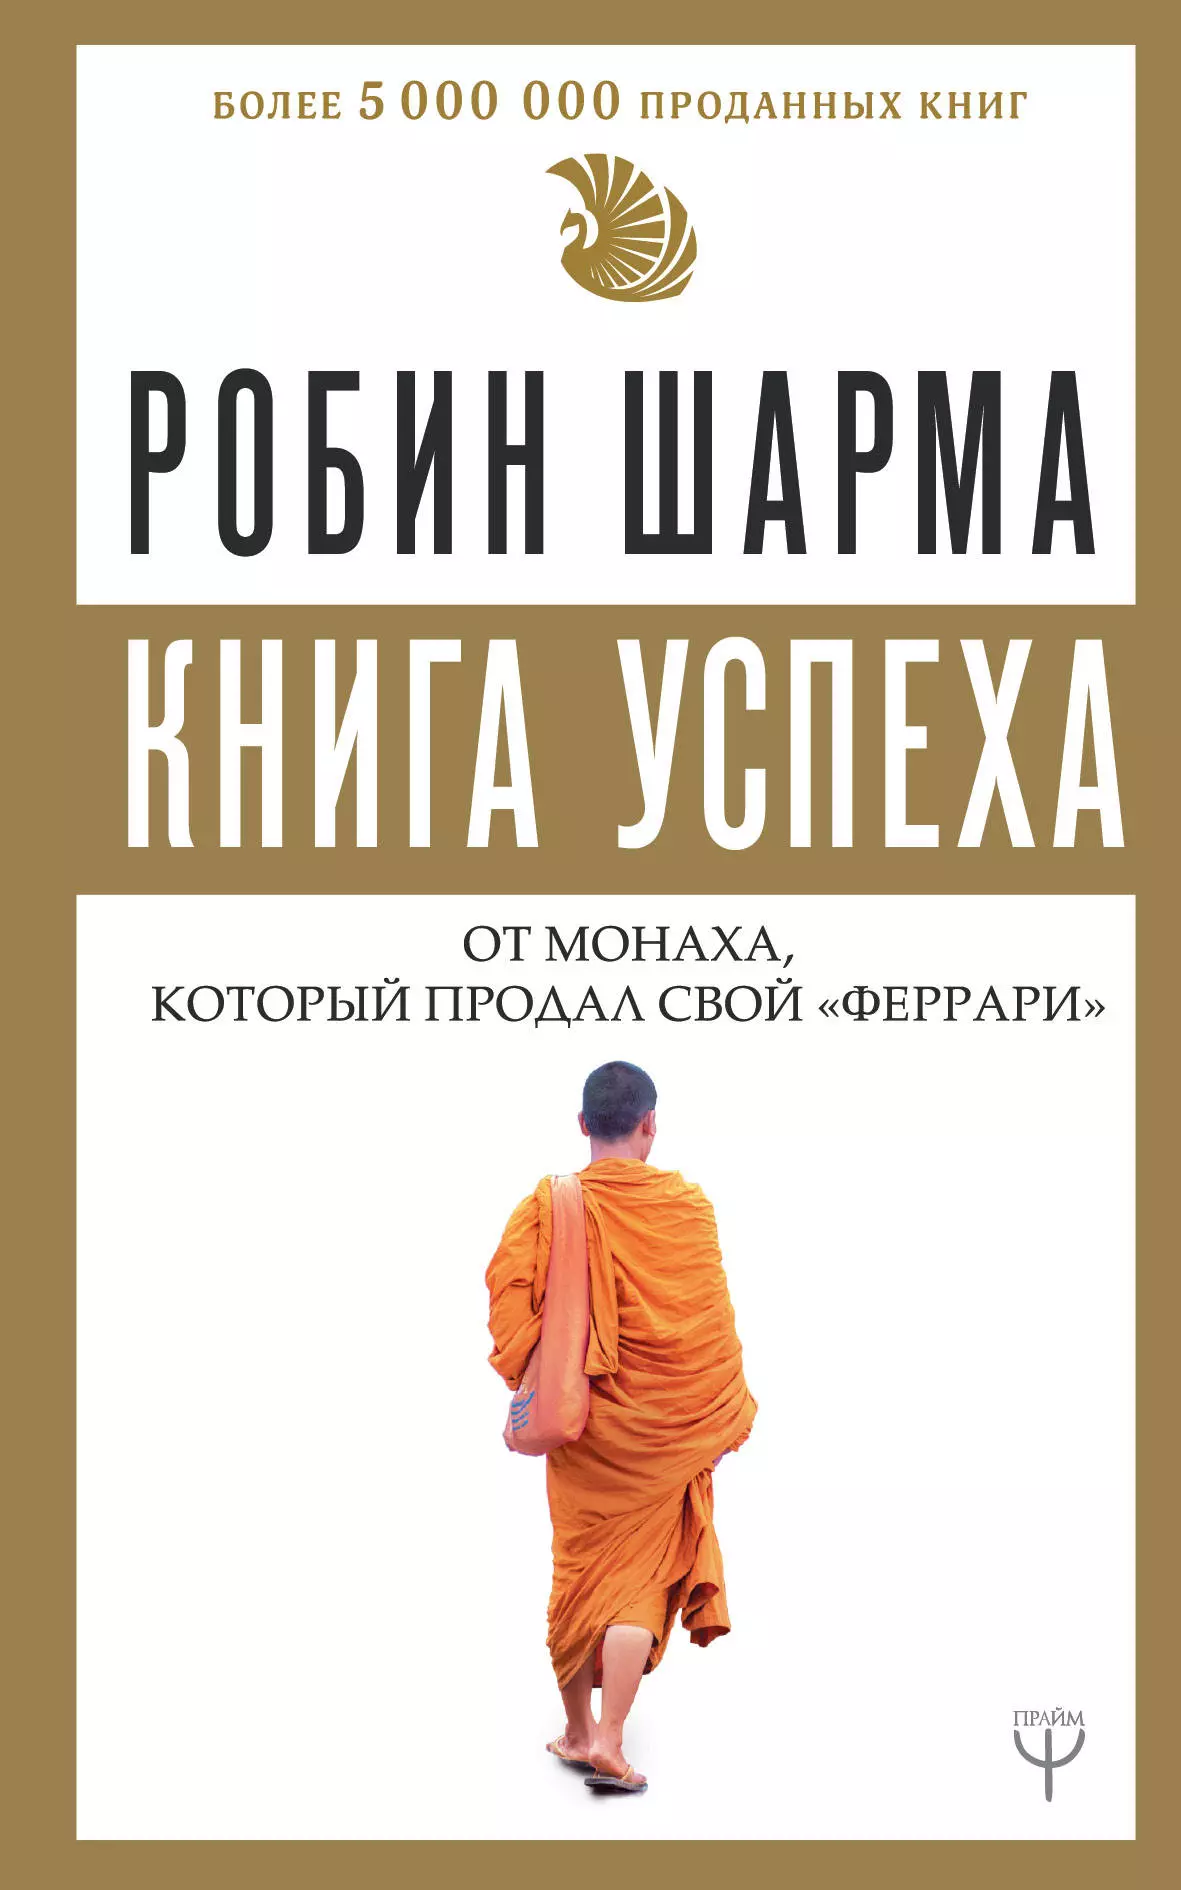 Шарма Робин - Книга успеха от монаха, который продал свой «феррари»